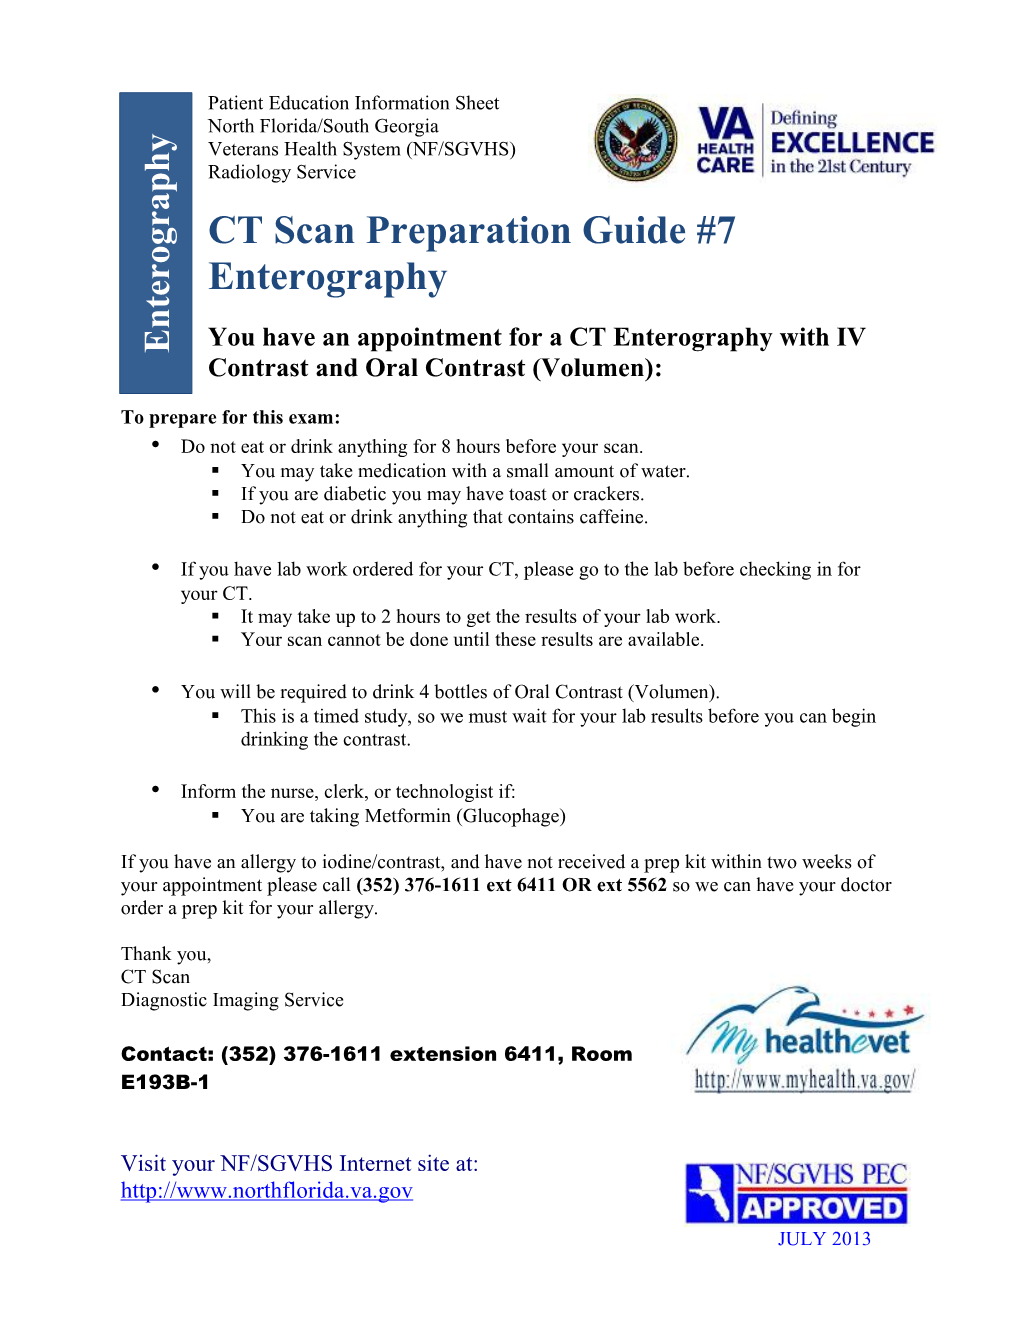 CT Scan Preparation Guide #7 (Enterography)